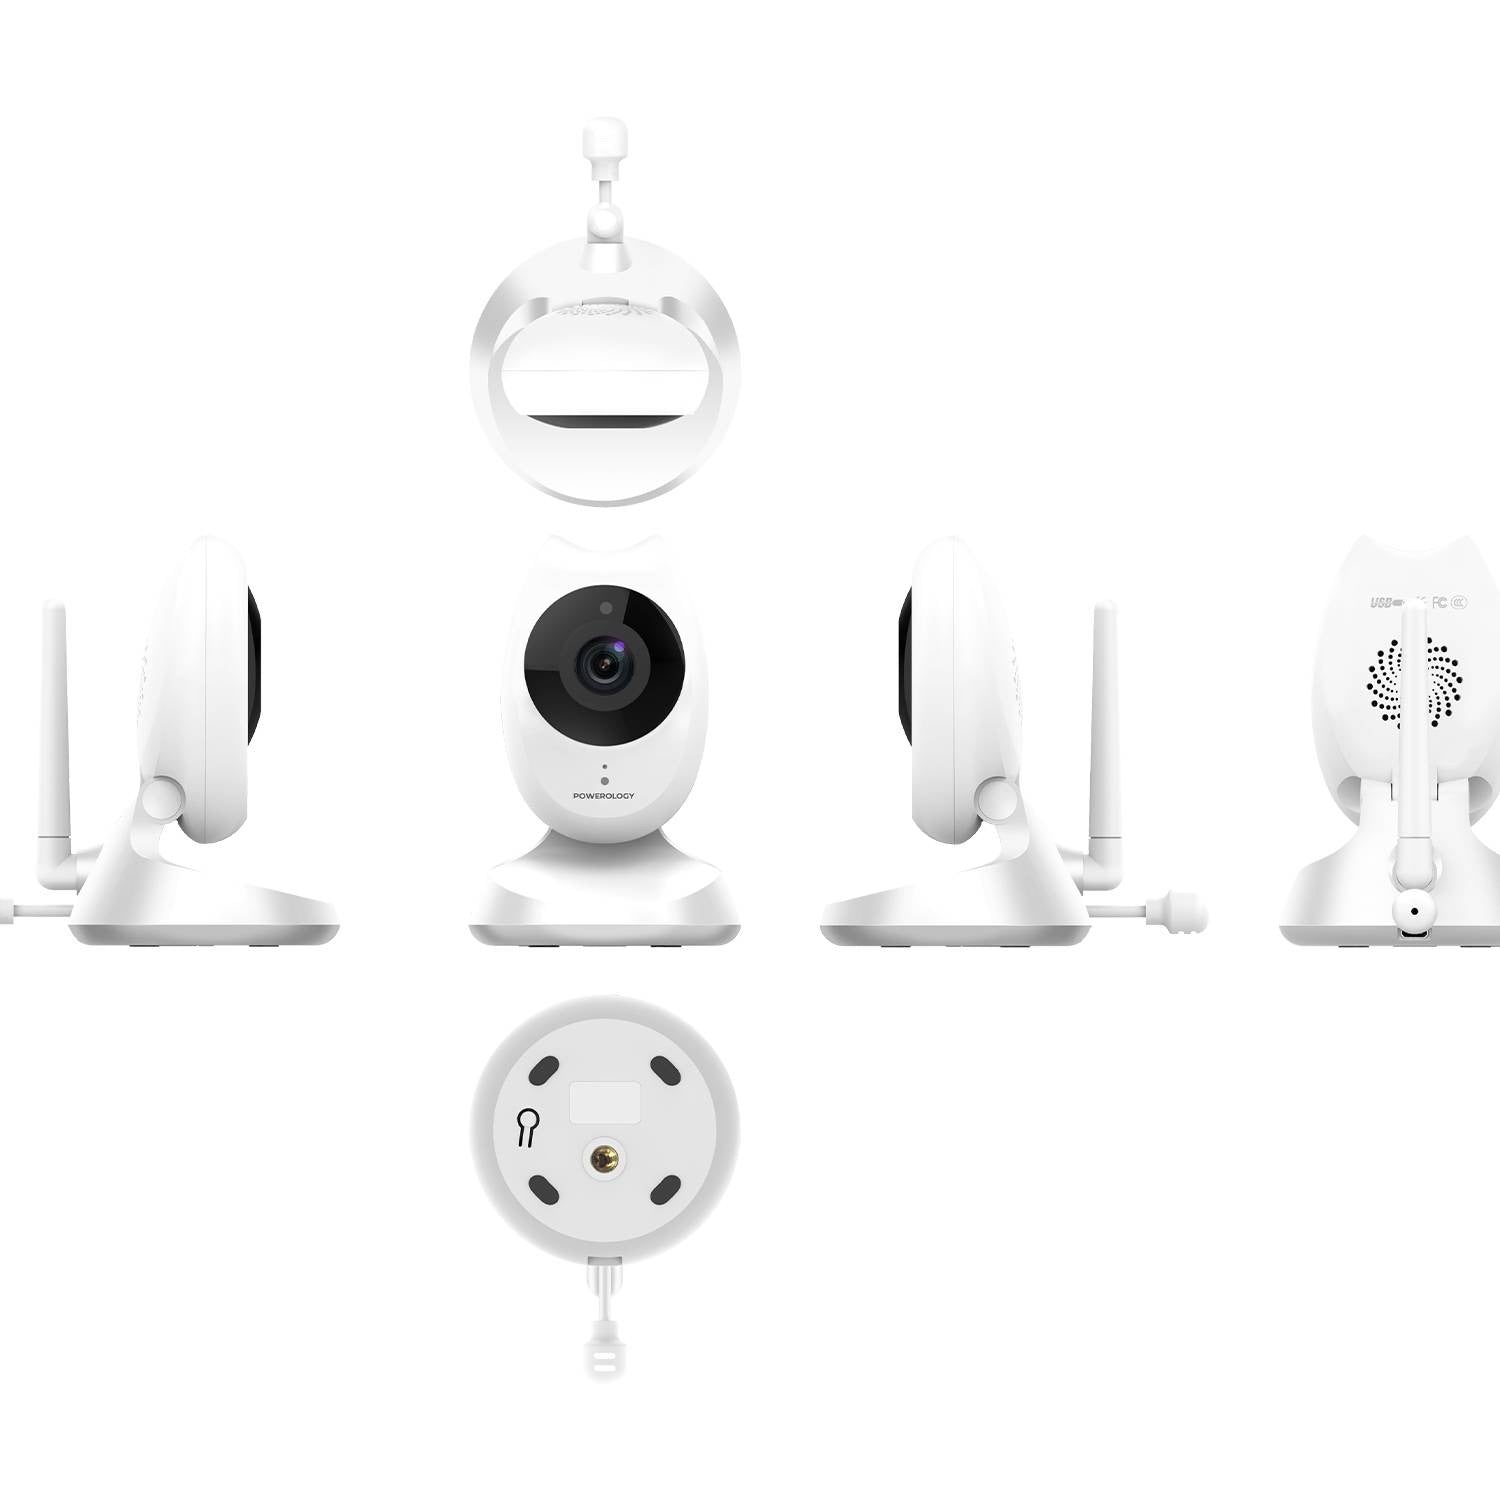 Powerology Smart Cam Baby Monitor Two-way audio